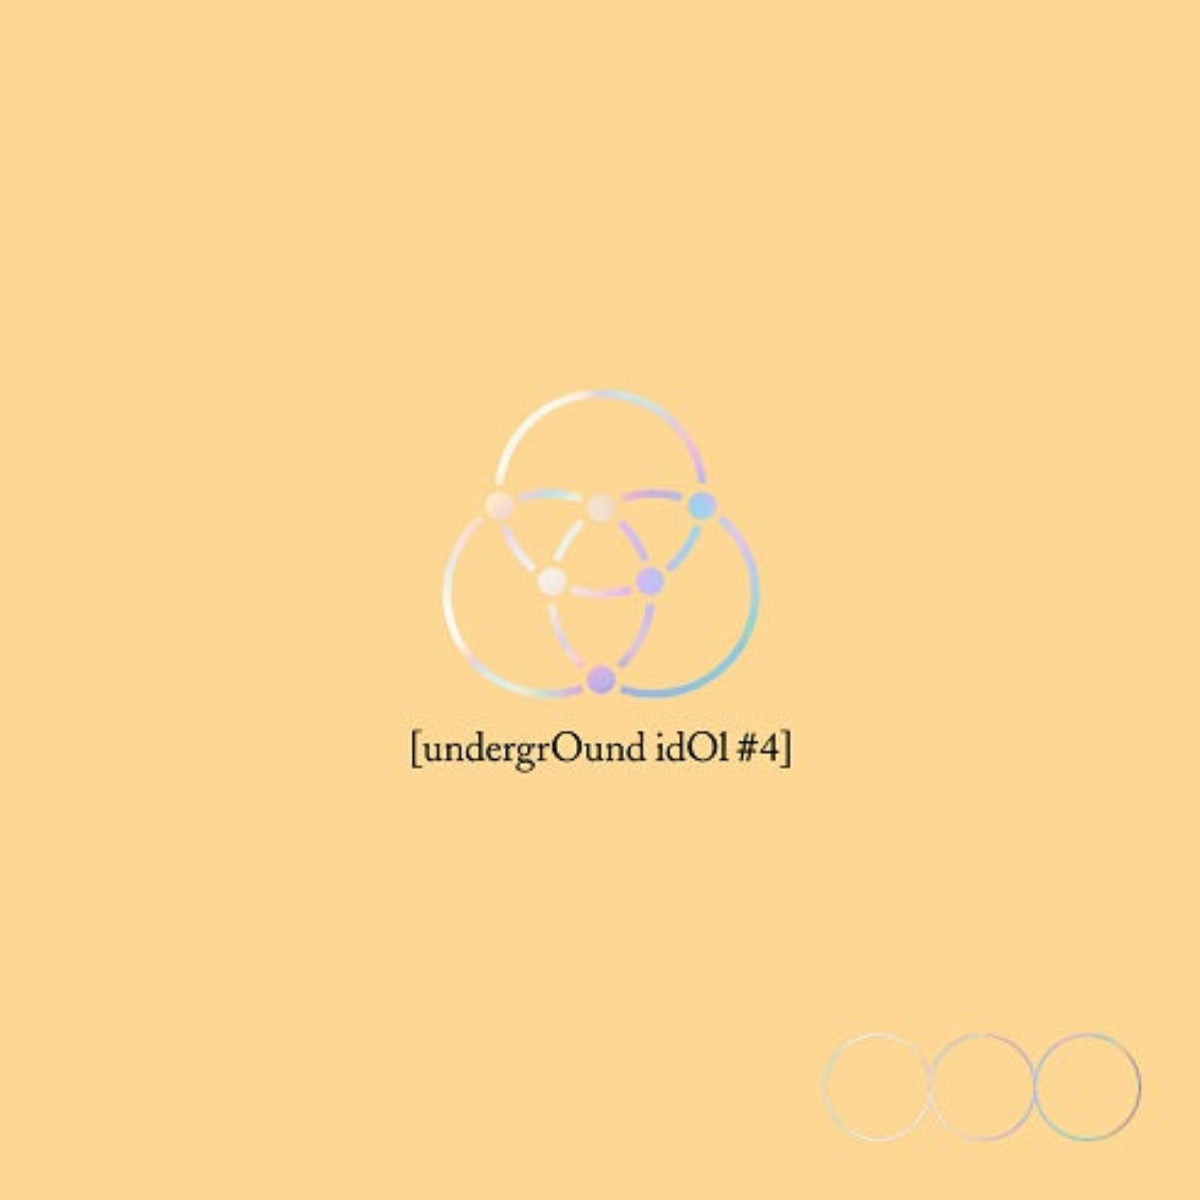 OnlyOneOf: Rie Single Album Vol. 1 - undergrOund idOl #4